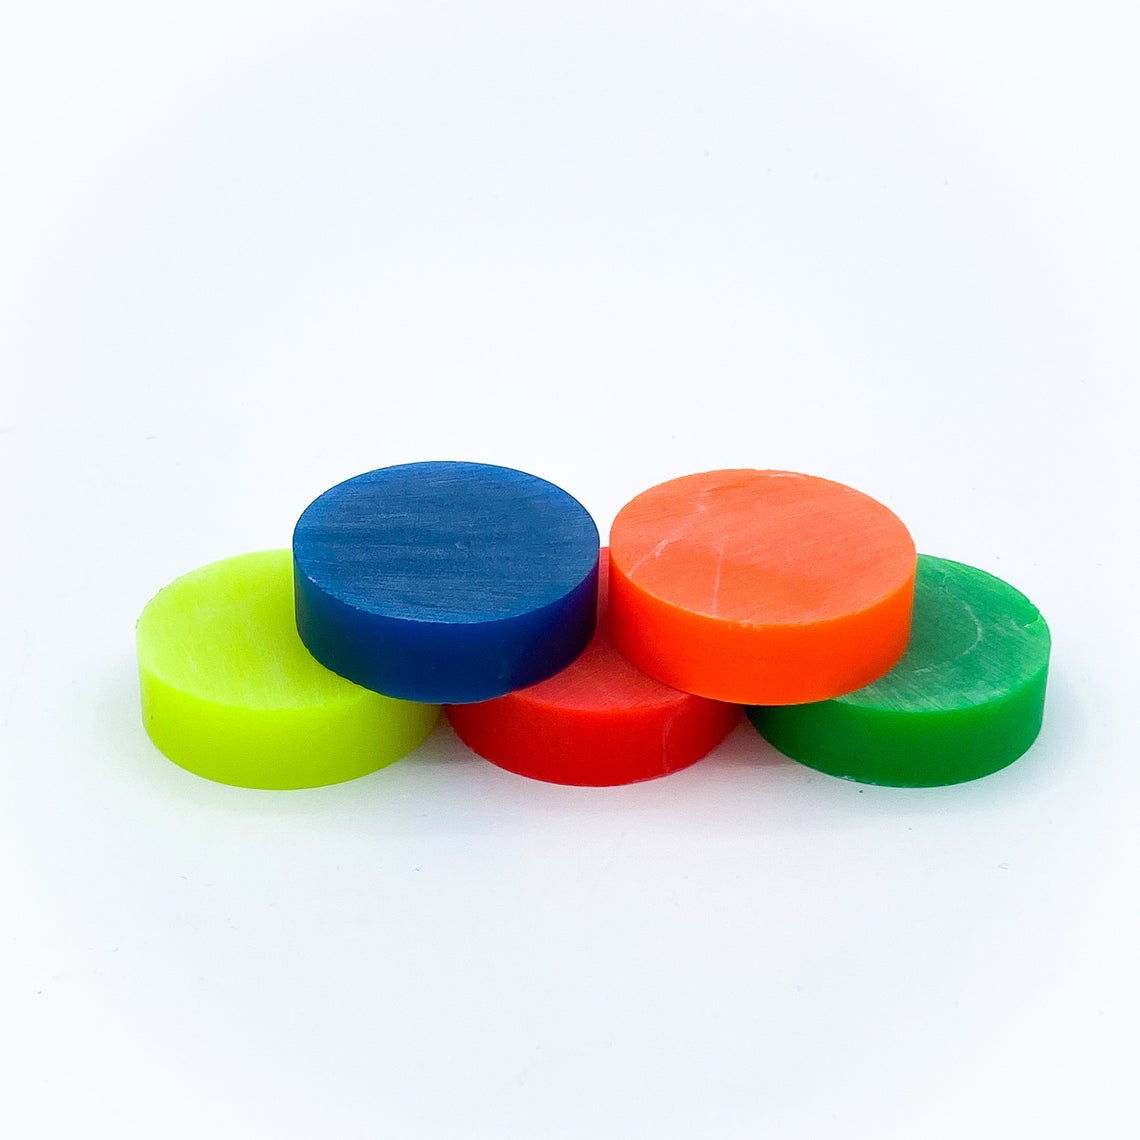 Resin Ring Blank - 5 Pack - Patrick Adair Supplies